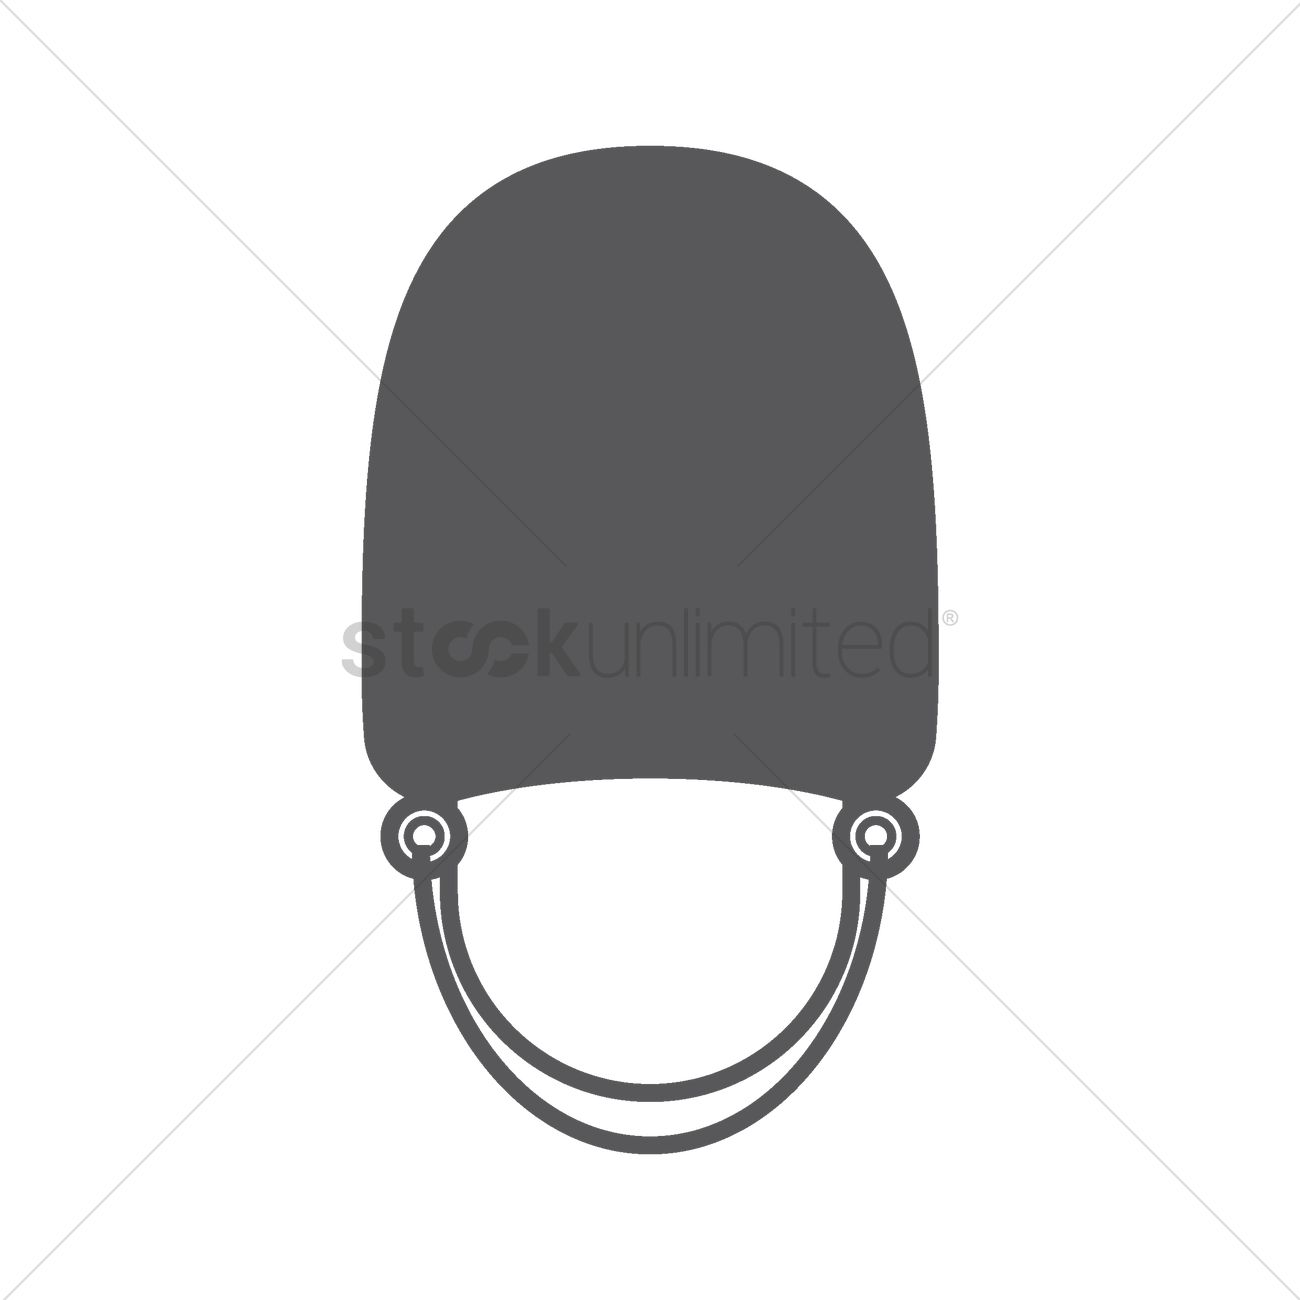 Bearskin cap for grenadier guards Vector Image.